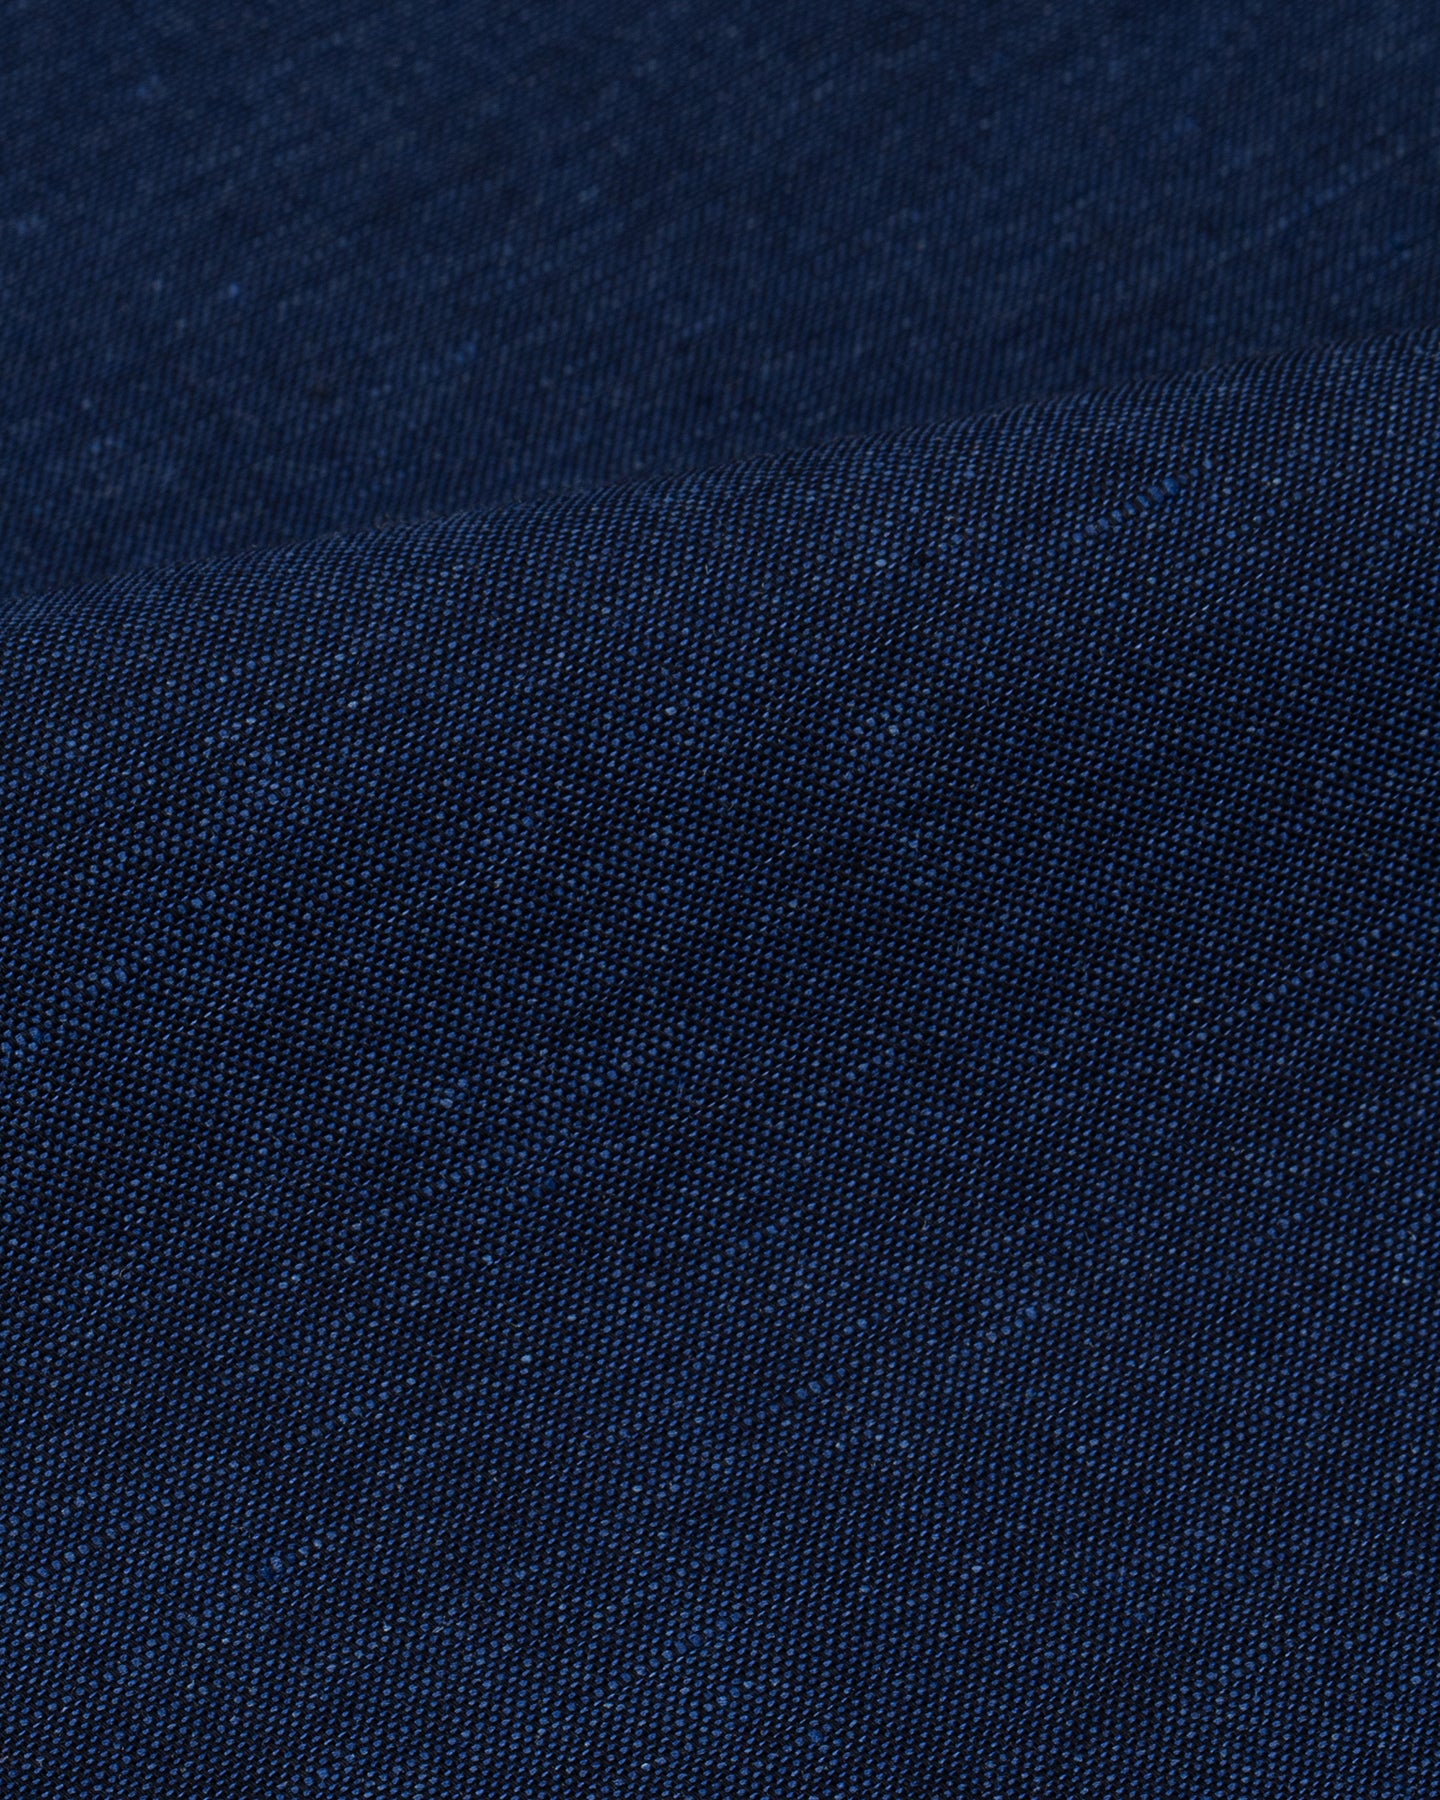 Navy cotton linen oxford shirt fabric